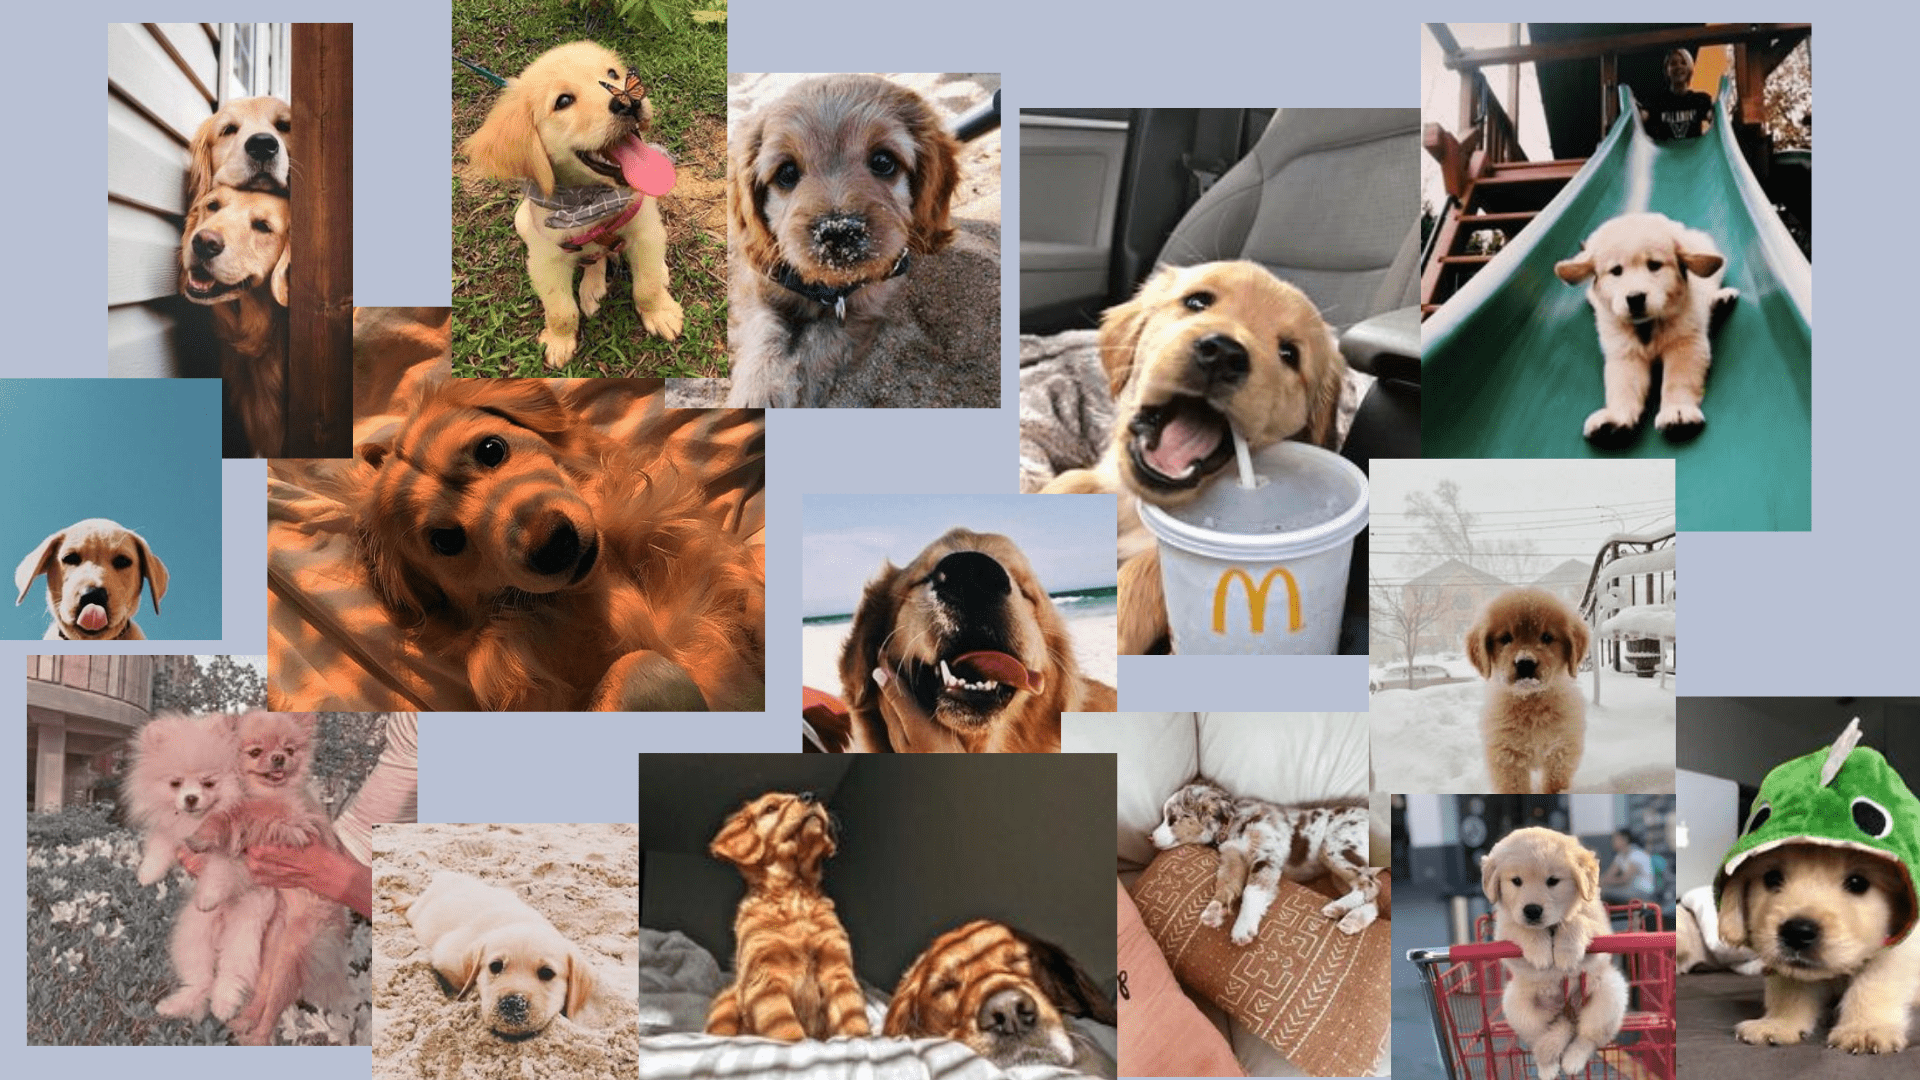 p u p p i e s. Dog wallpaper, Puppy wallpaper, Cute animals image